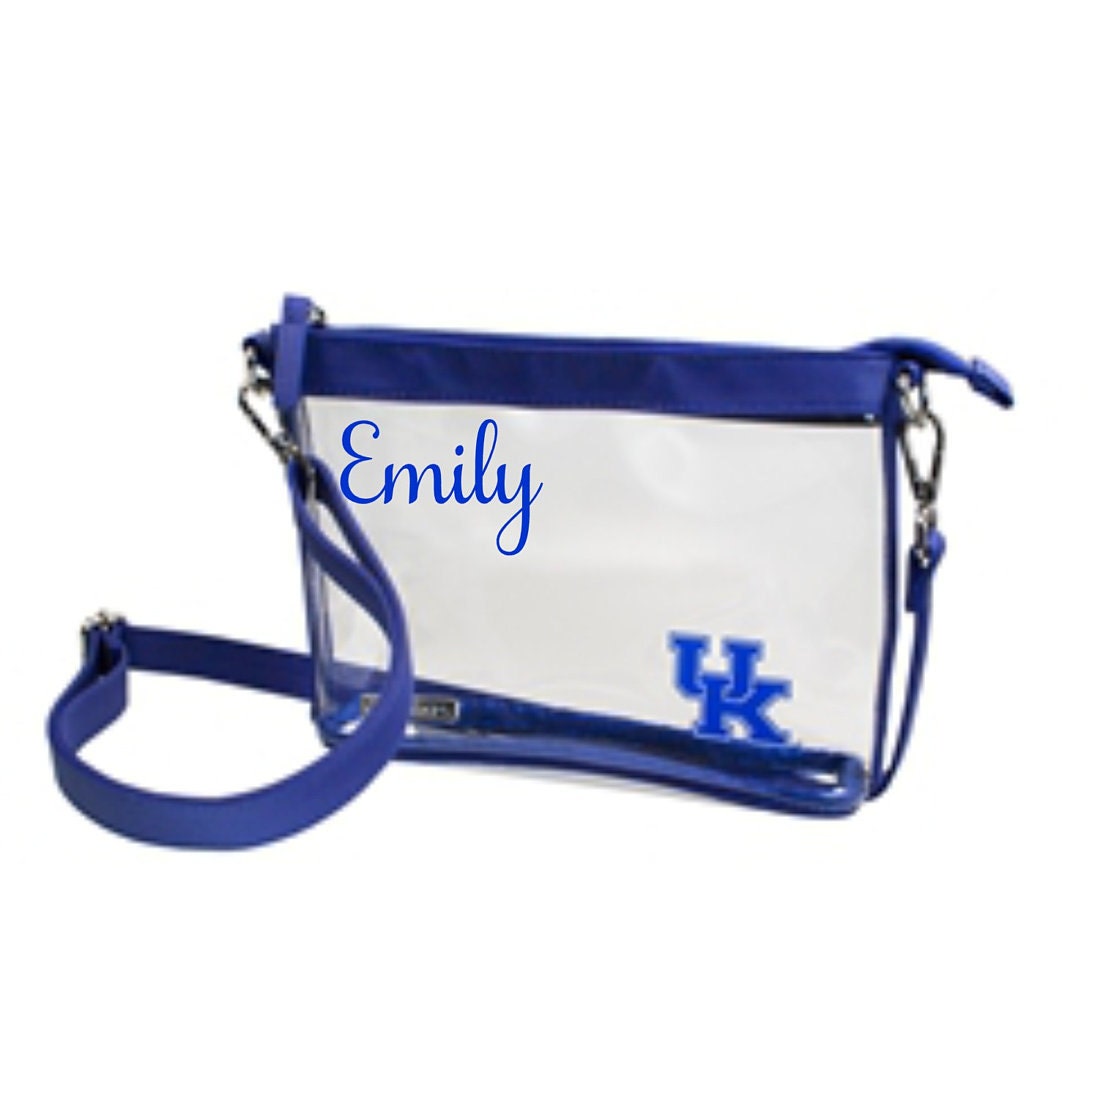 University of Kentucky Ladies Purse, Kentucky Wildcats Tote Bags, Handbags,  Clutches